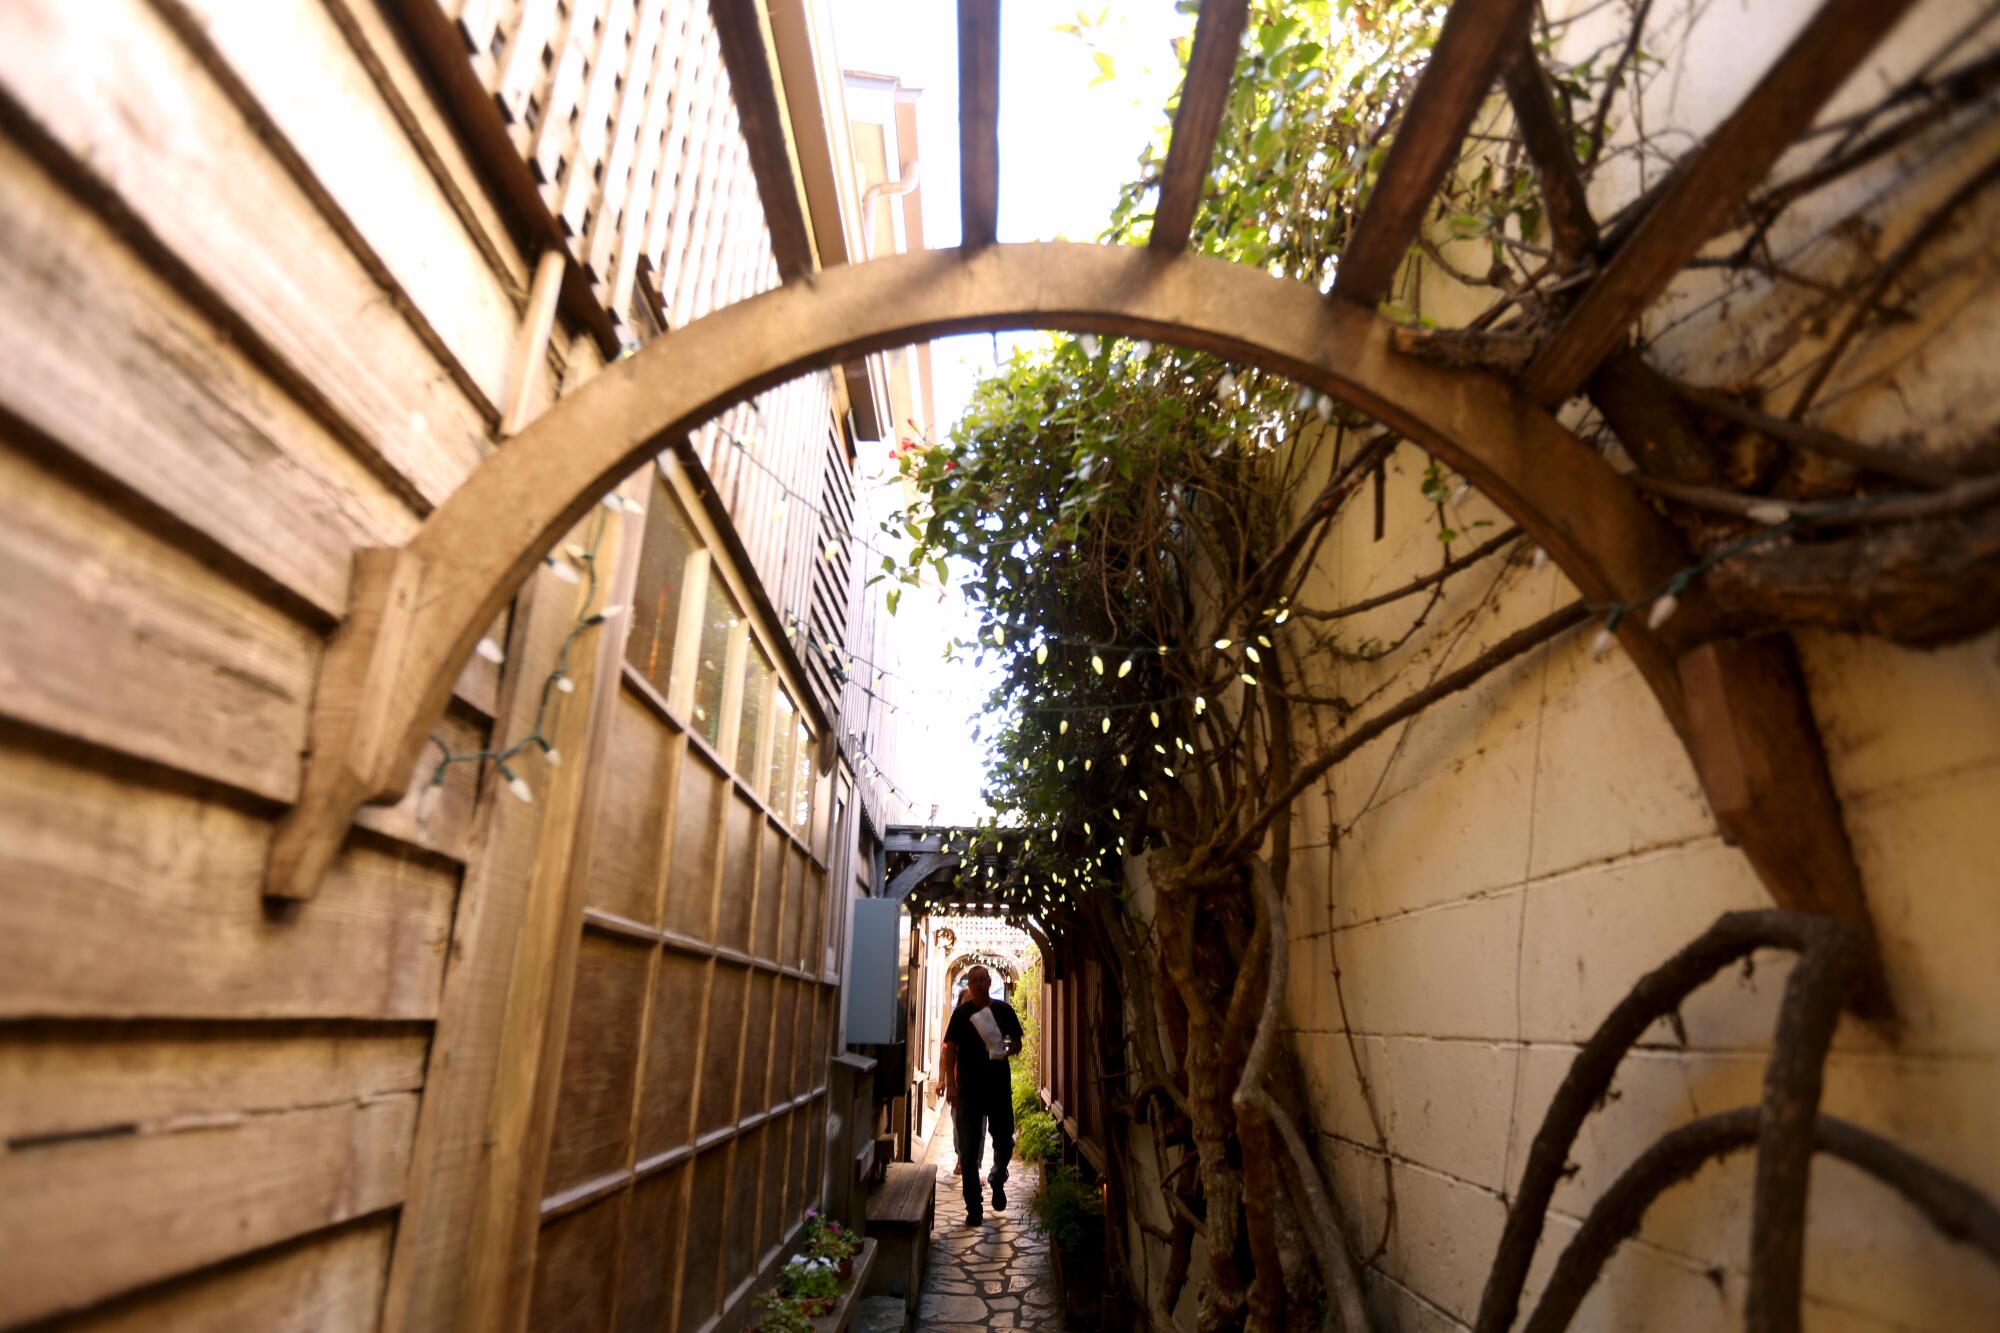 A visitor makes his way through a narrow outdoor passageway.